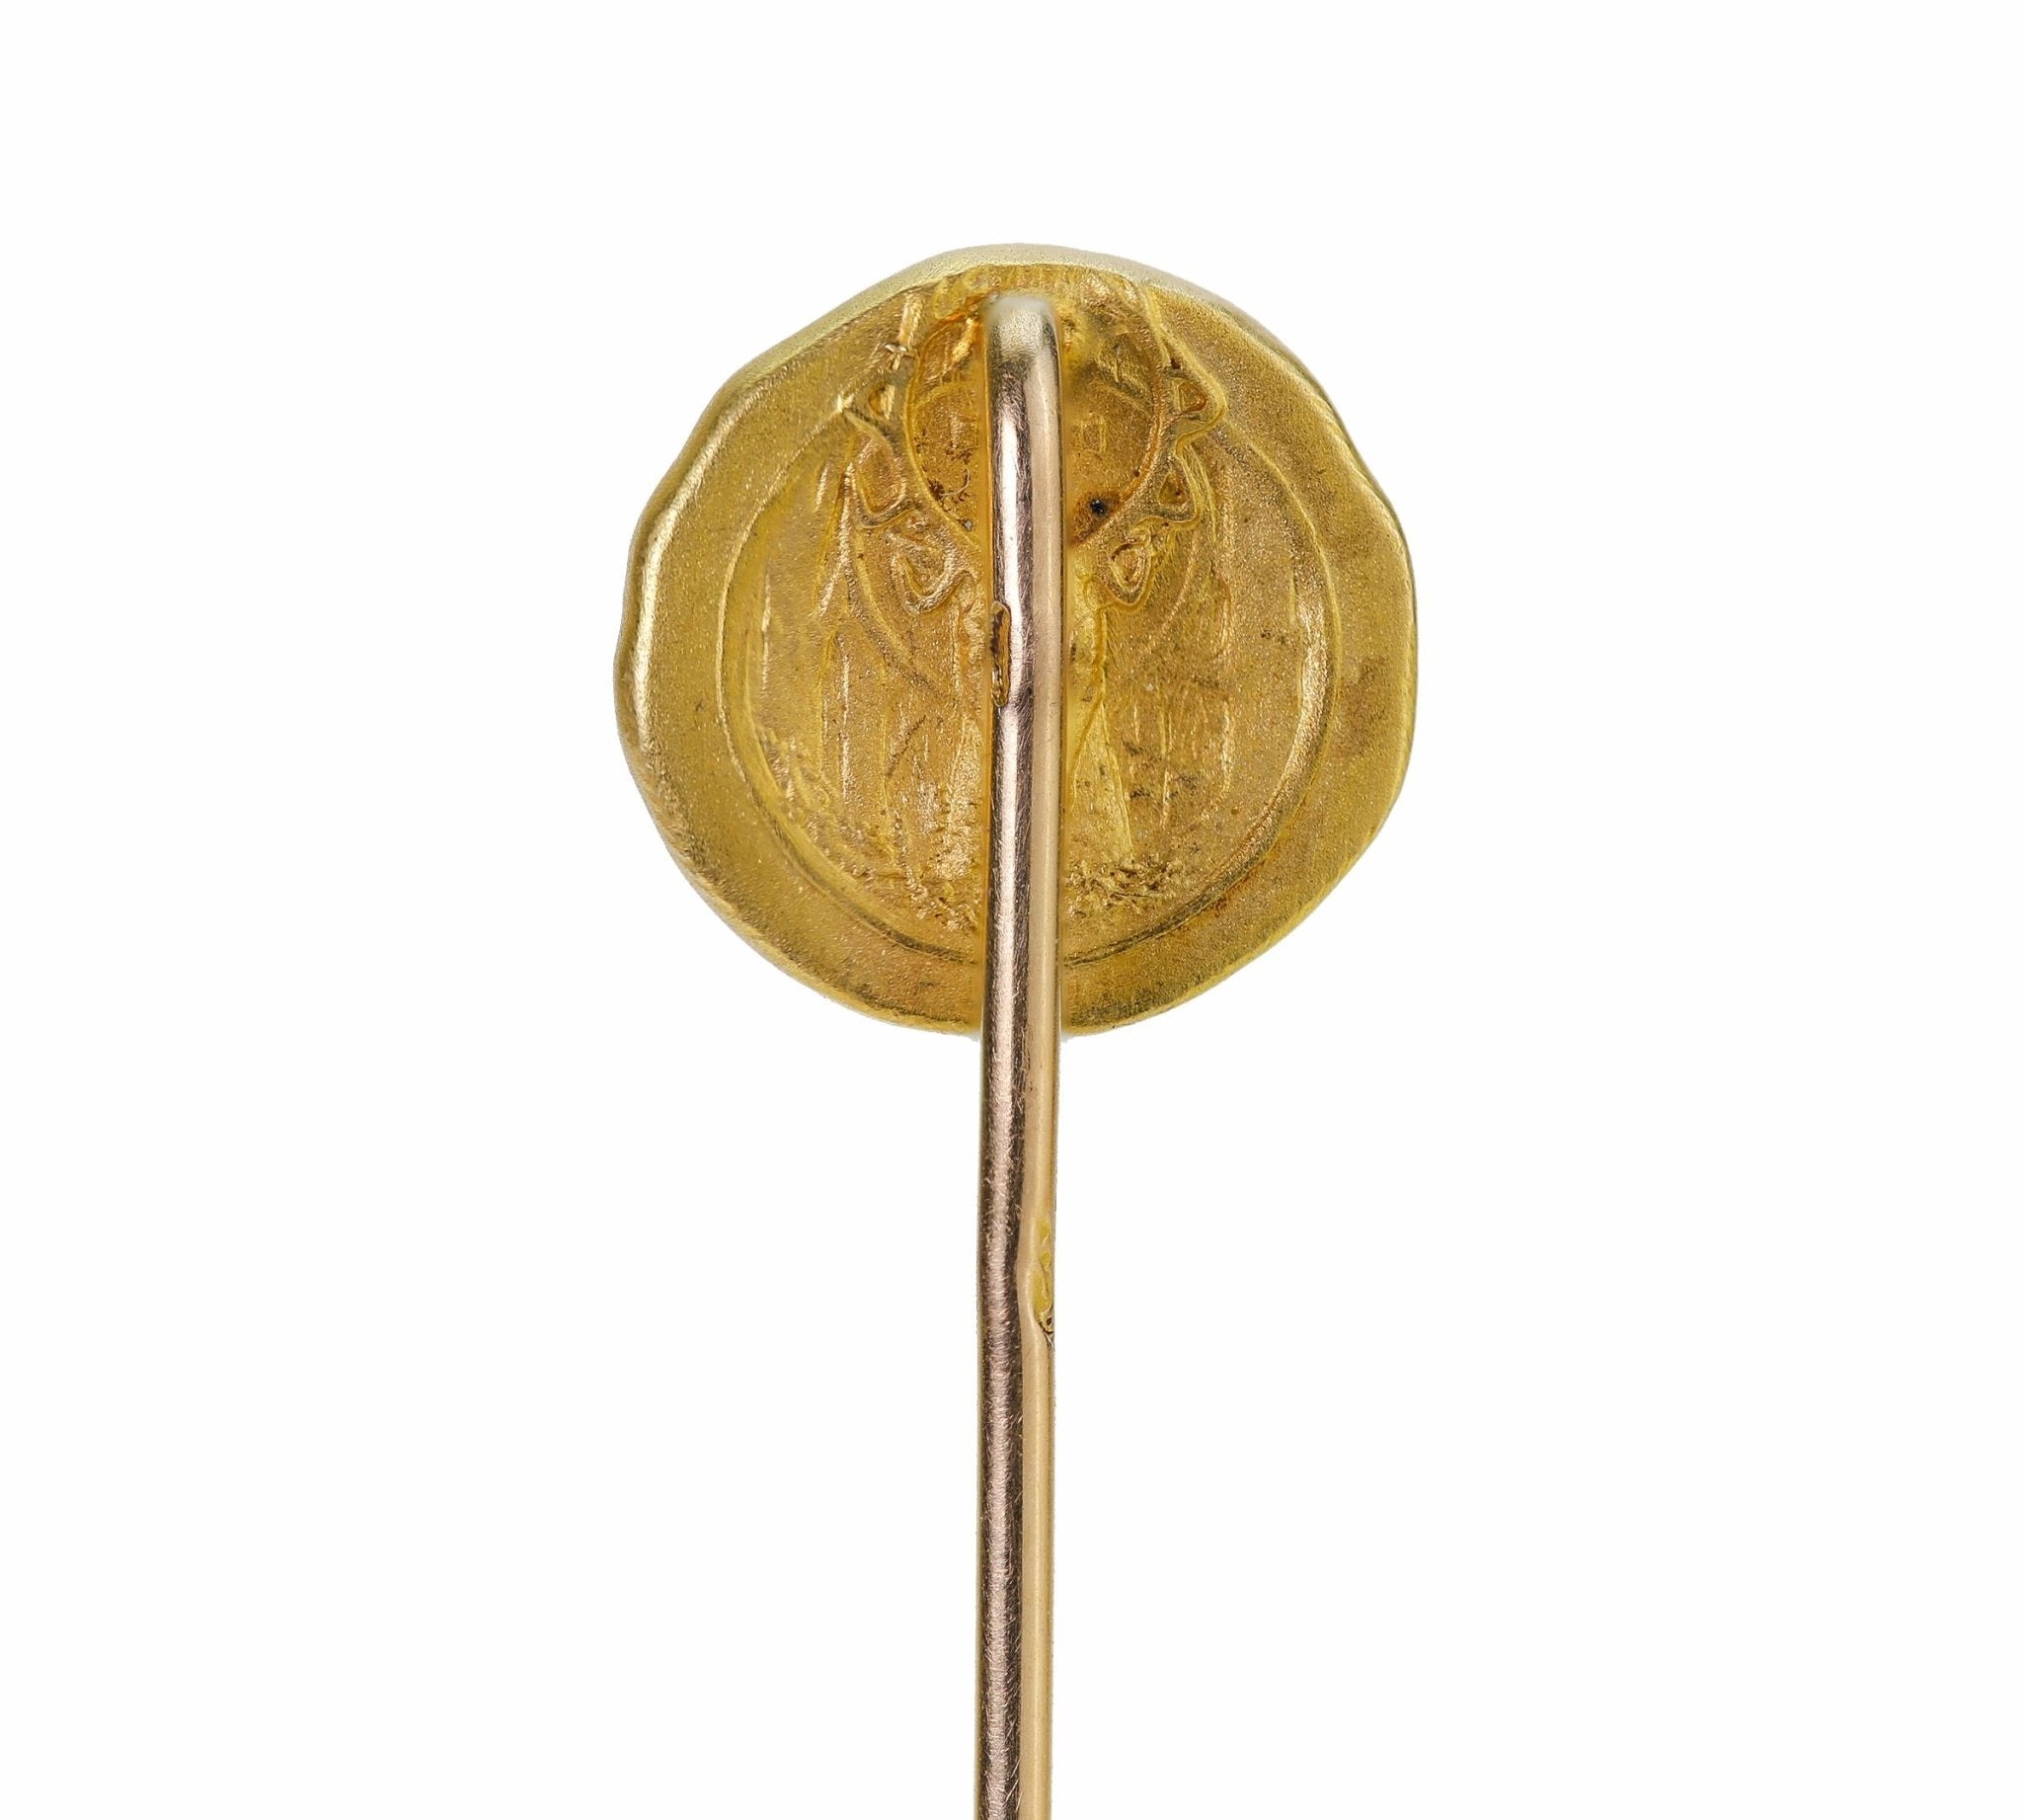 Antique Gold Coin Stick Pin